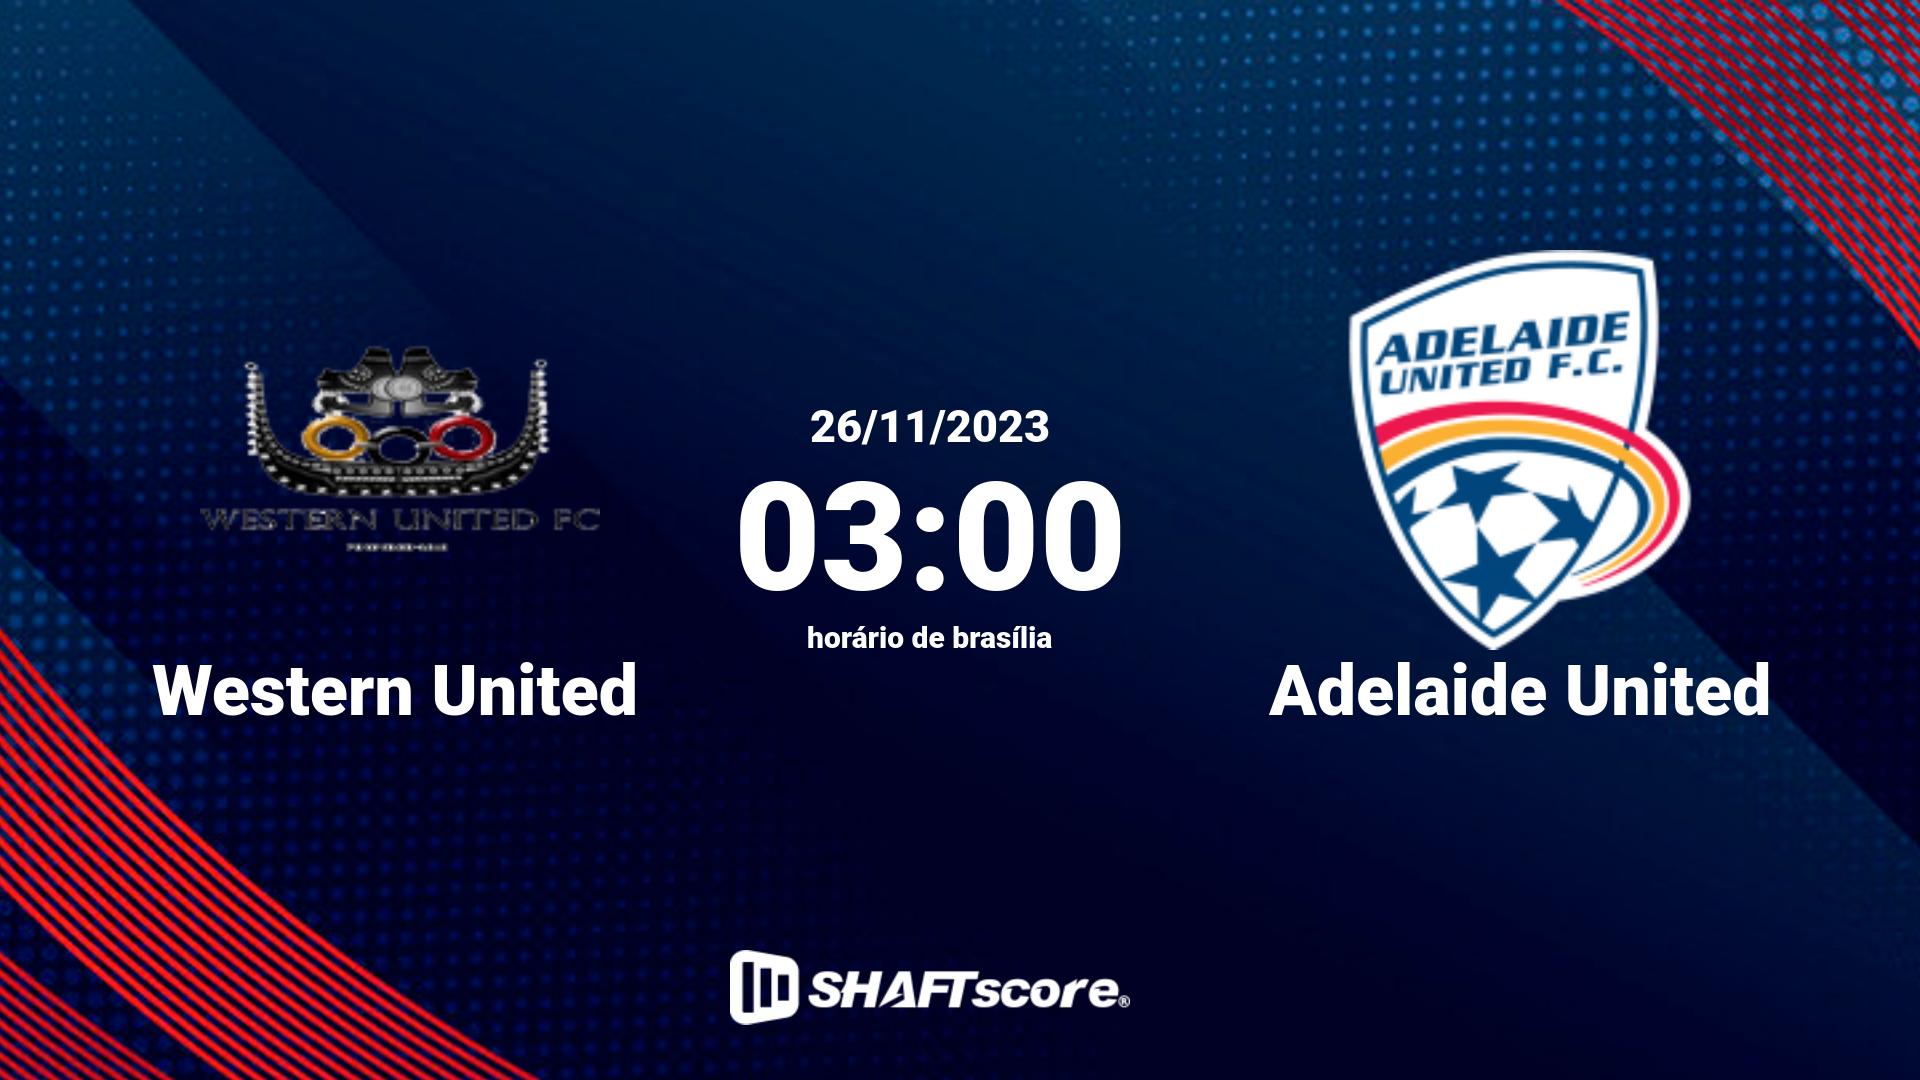 Estatísticas do jogo Western United vs Adelaide United 26.11 03:00